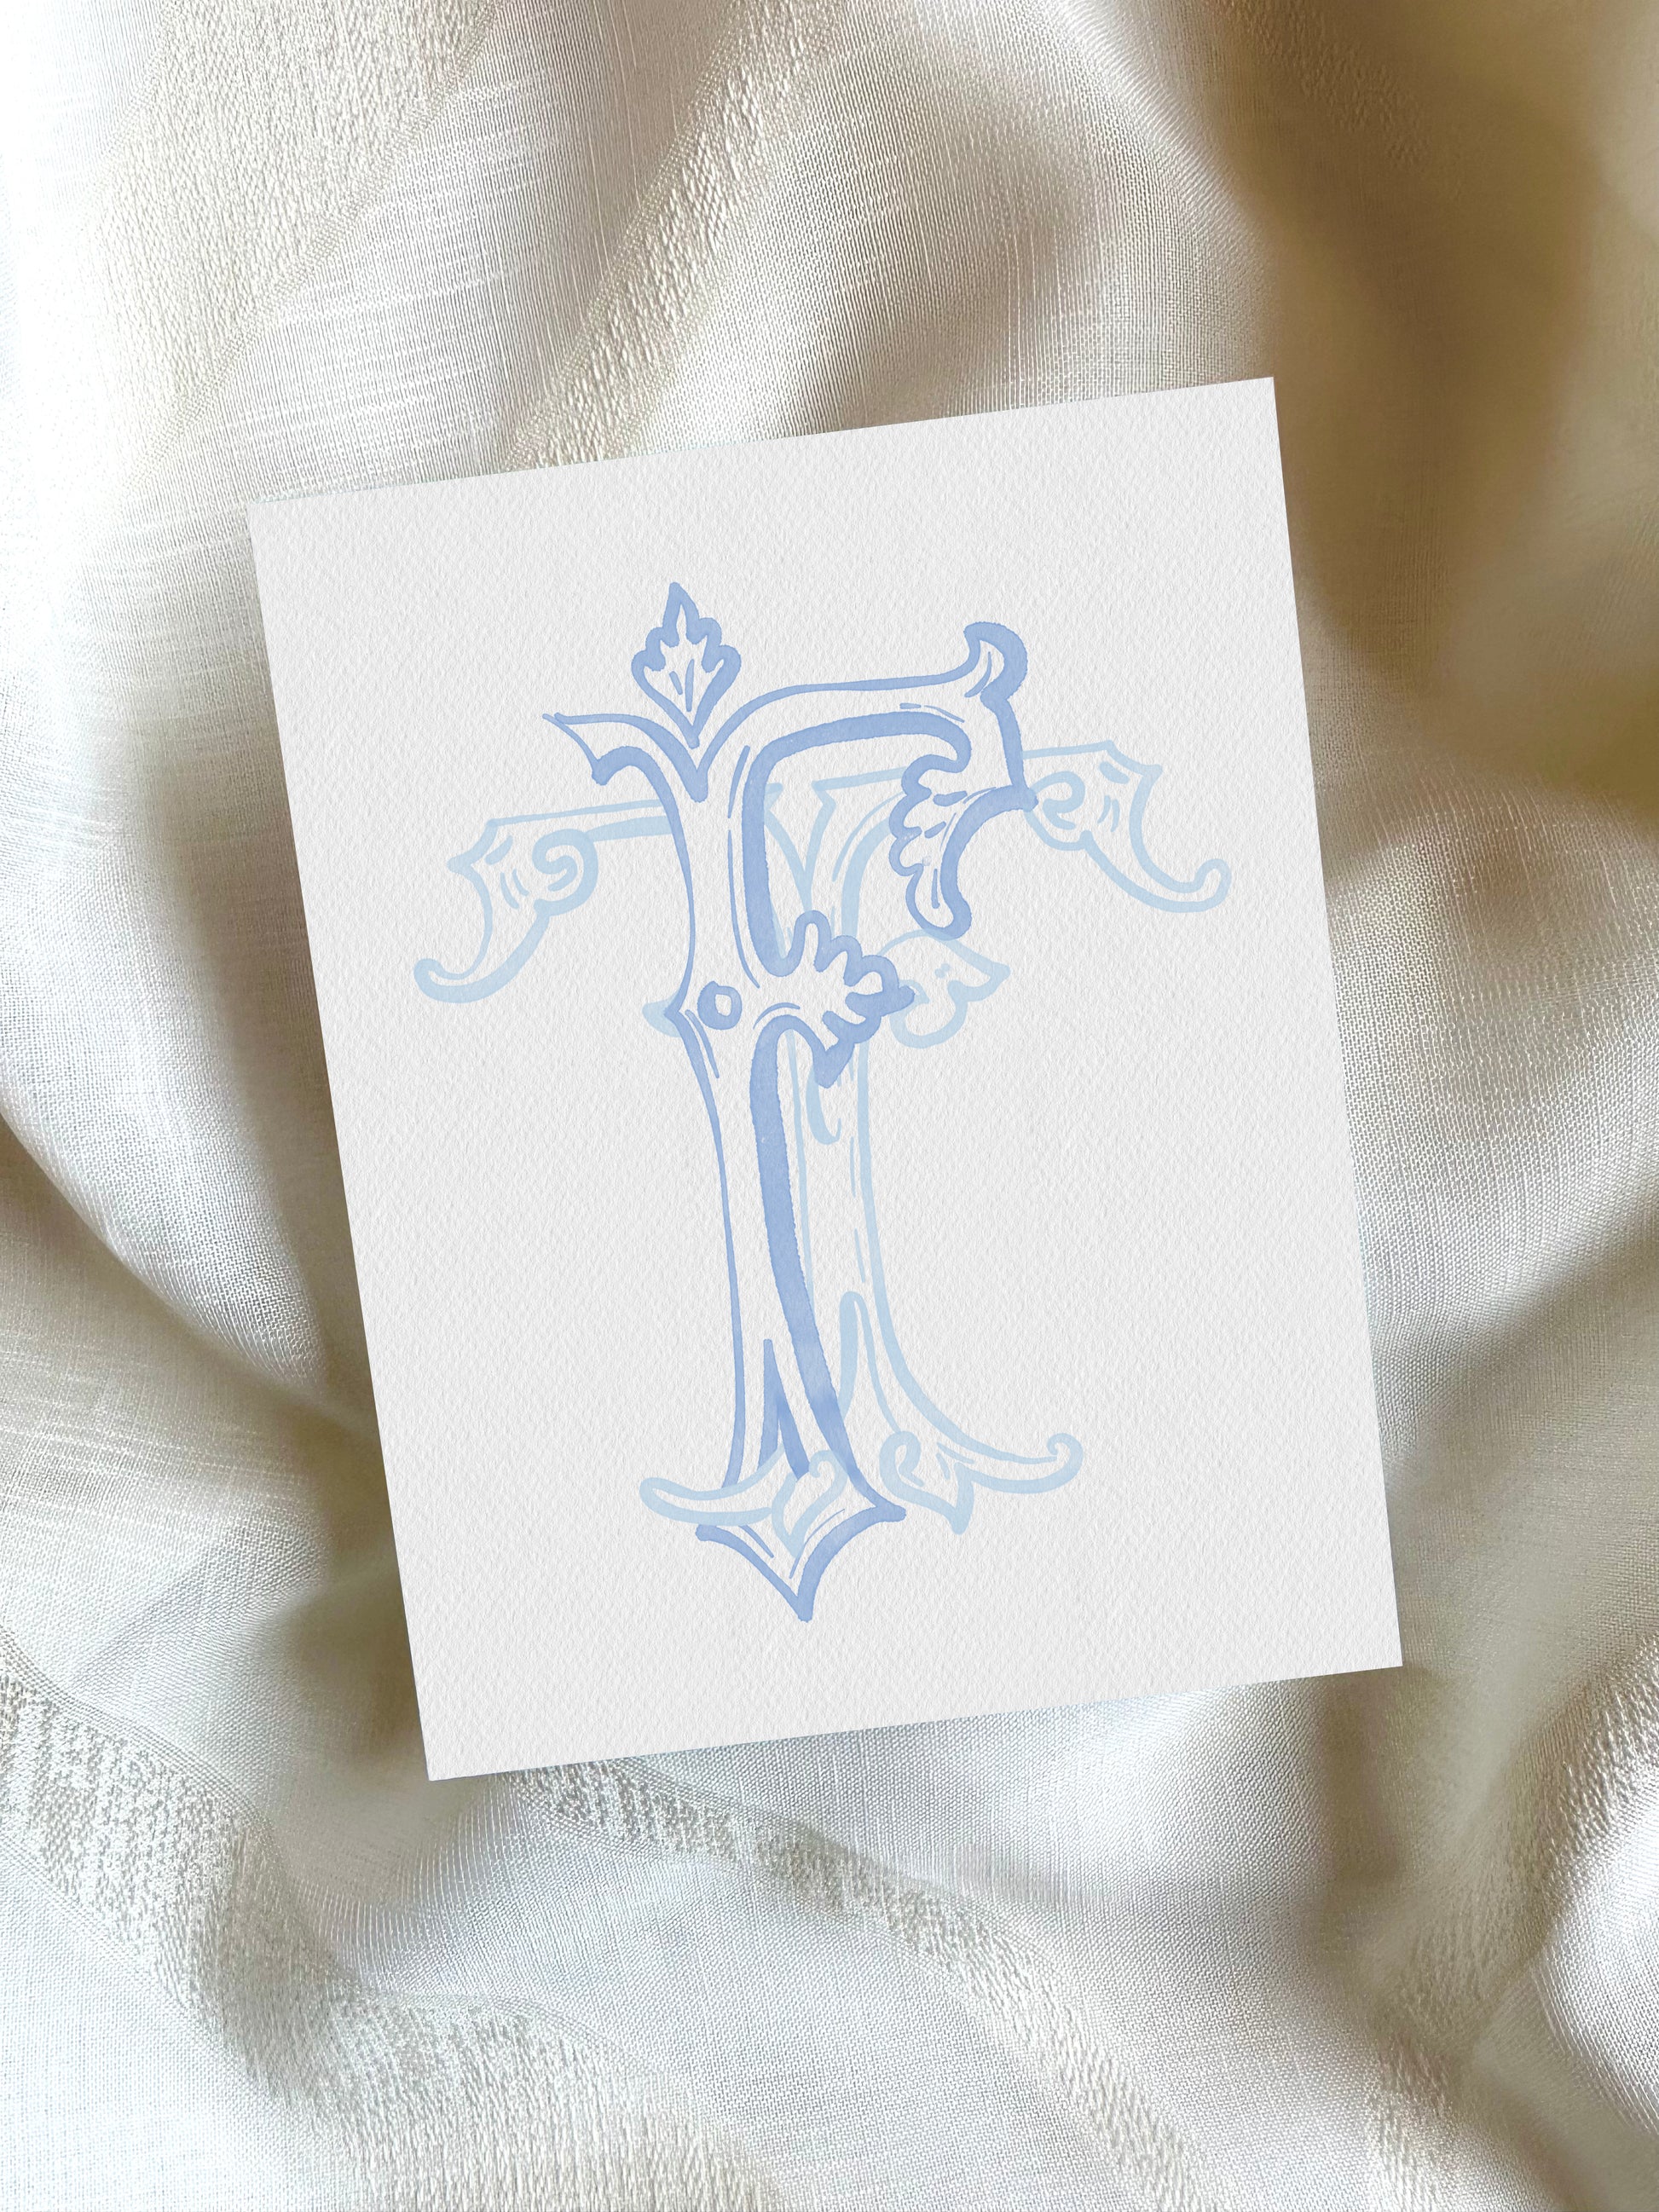 2 Letter Monogram with Letters FT TF | Digital Download - Wedding Monogram SVG, Personal Logo, Wedding Logo for Wedding Invitations The Wedding Crest Lab